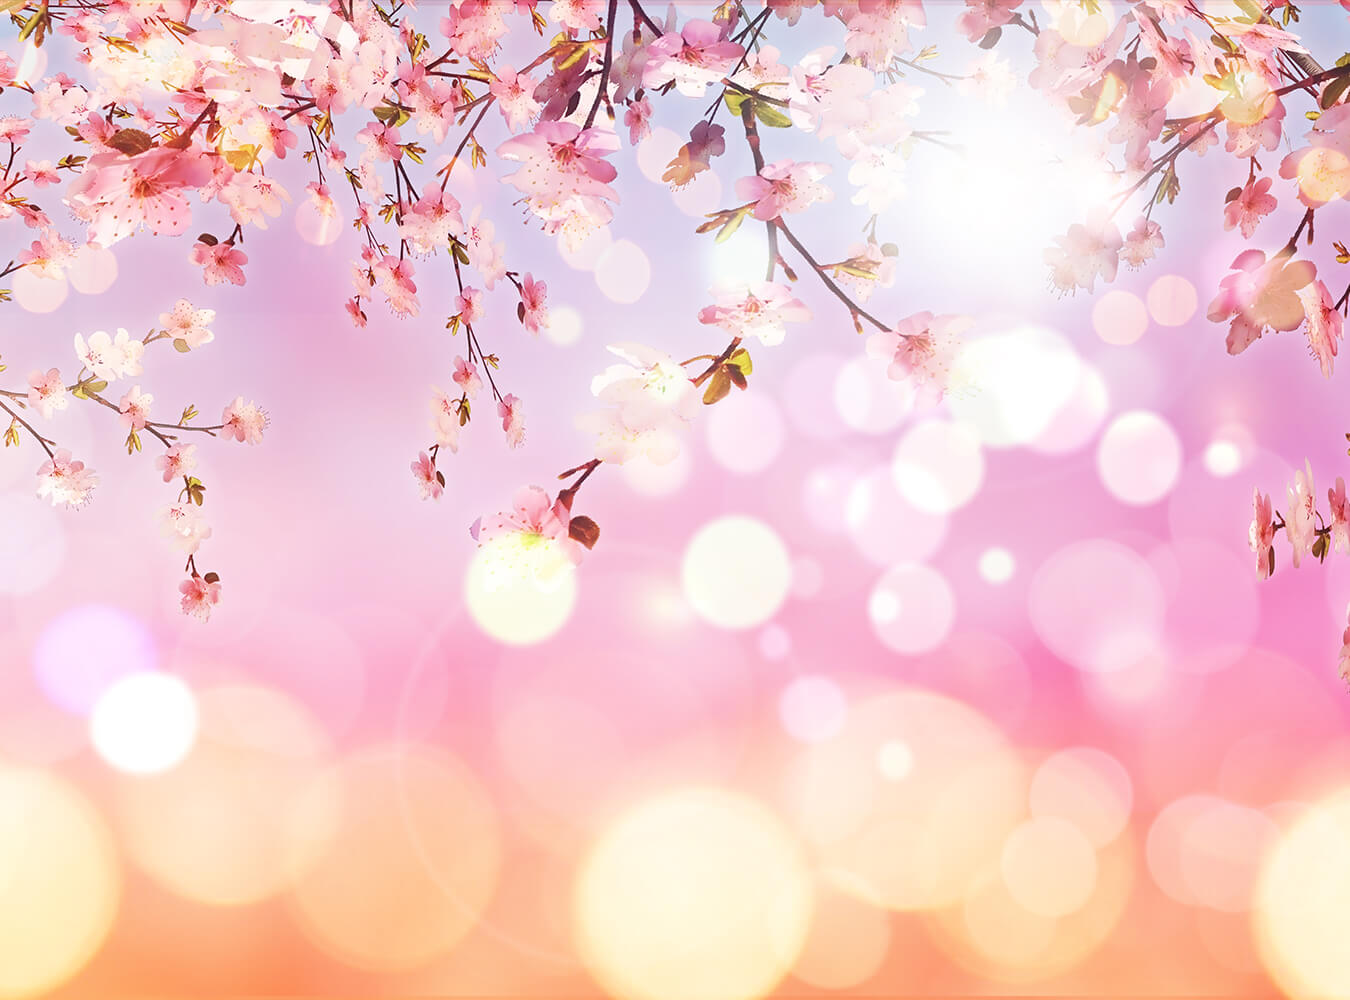 Flower Backdrops Pink Floral Background for Photography IBD-24495